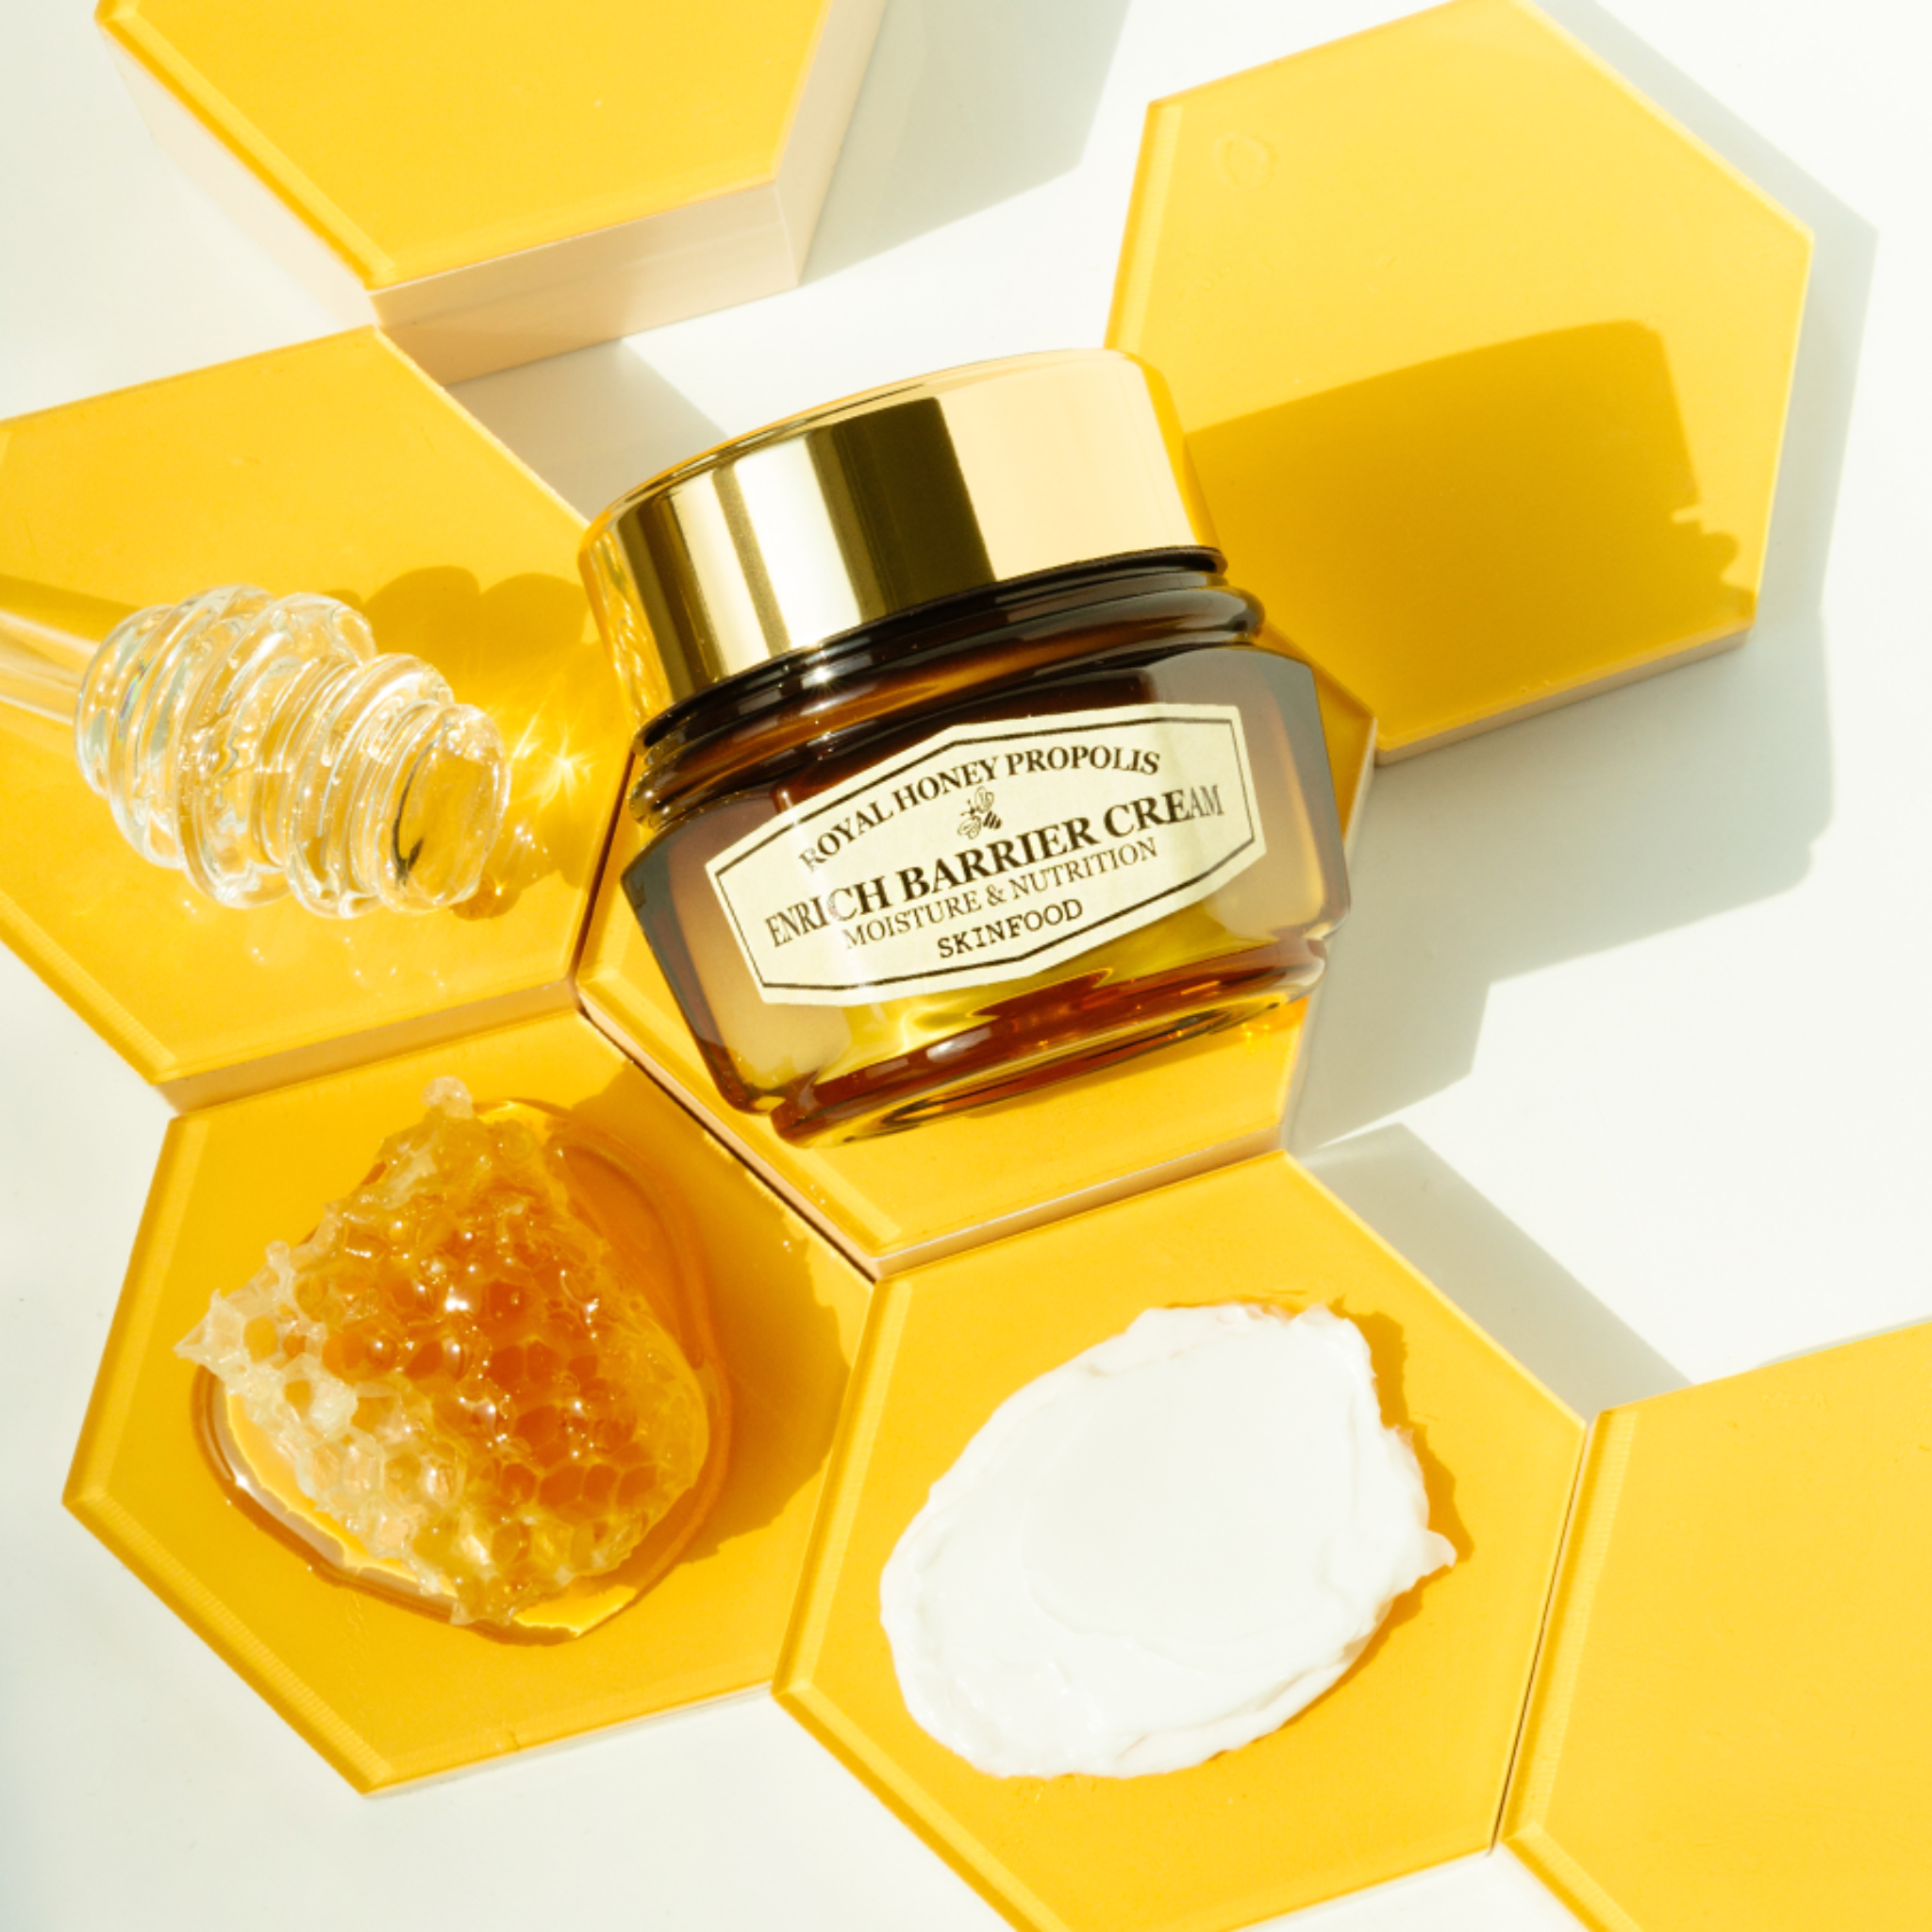 SKINFOOD Royal Honey Propolis Enrich Barrier Cream (63ml)